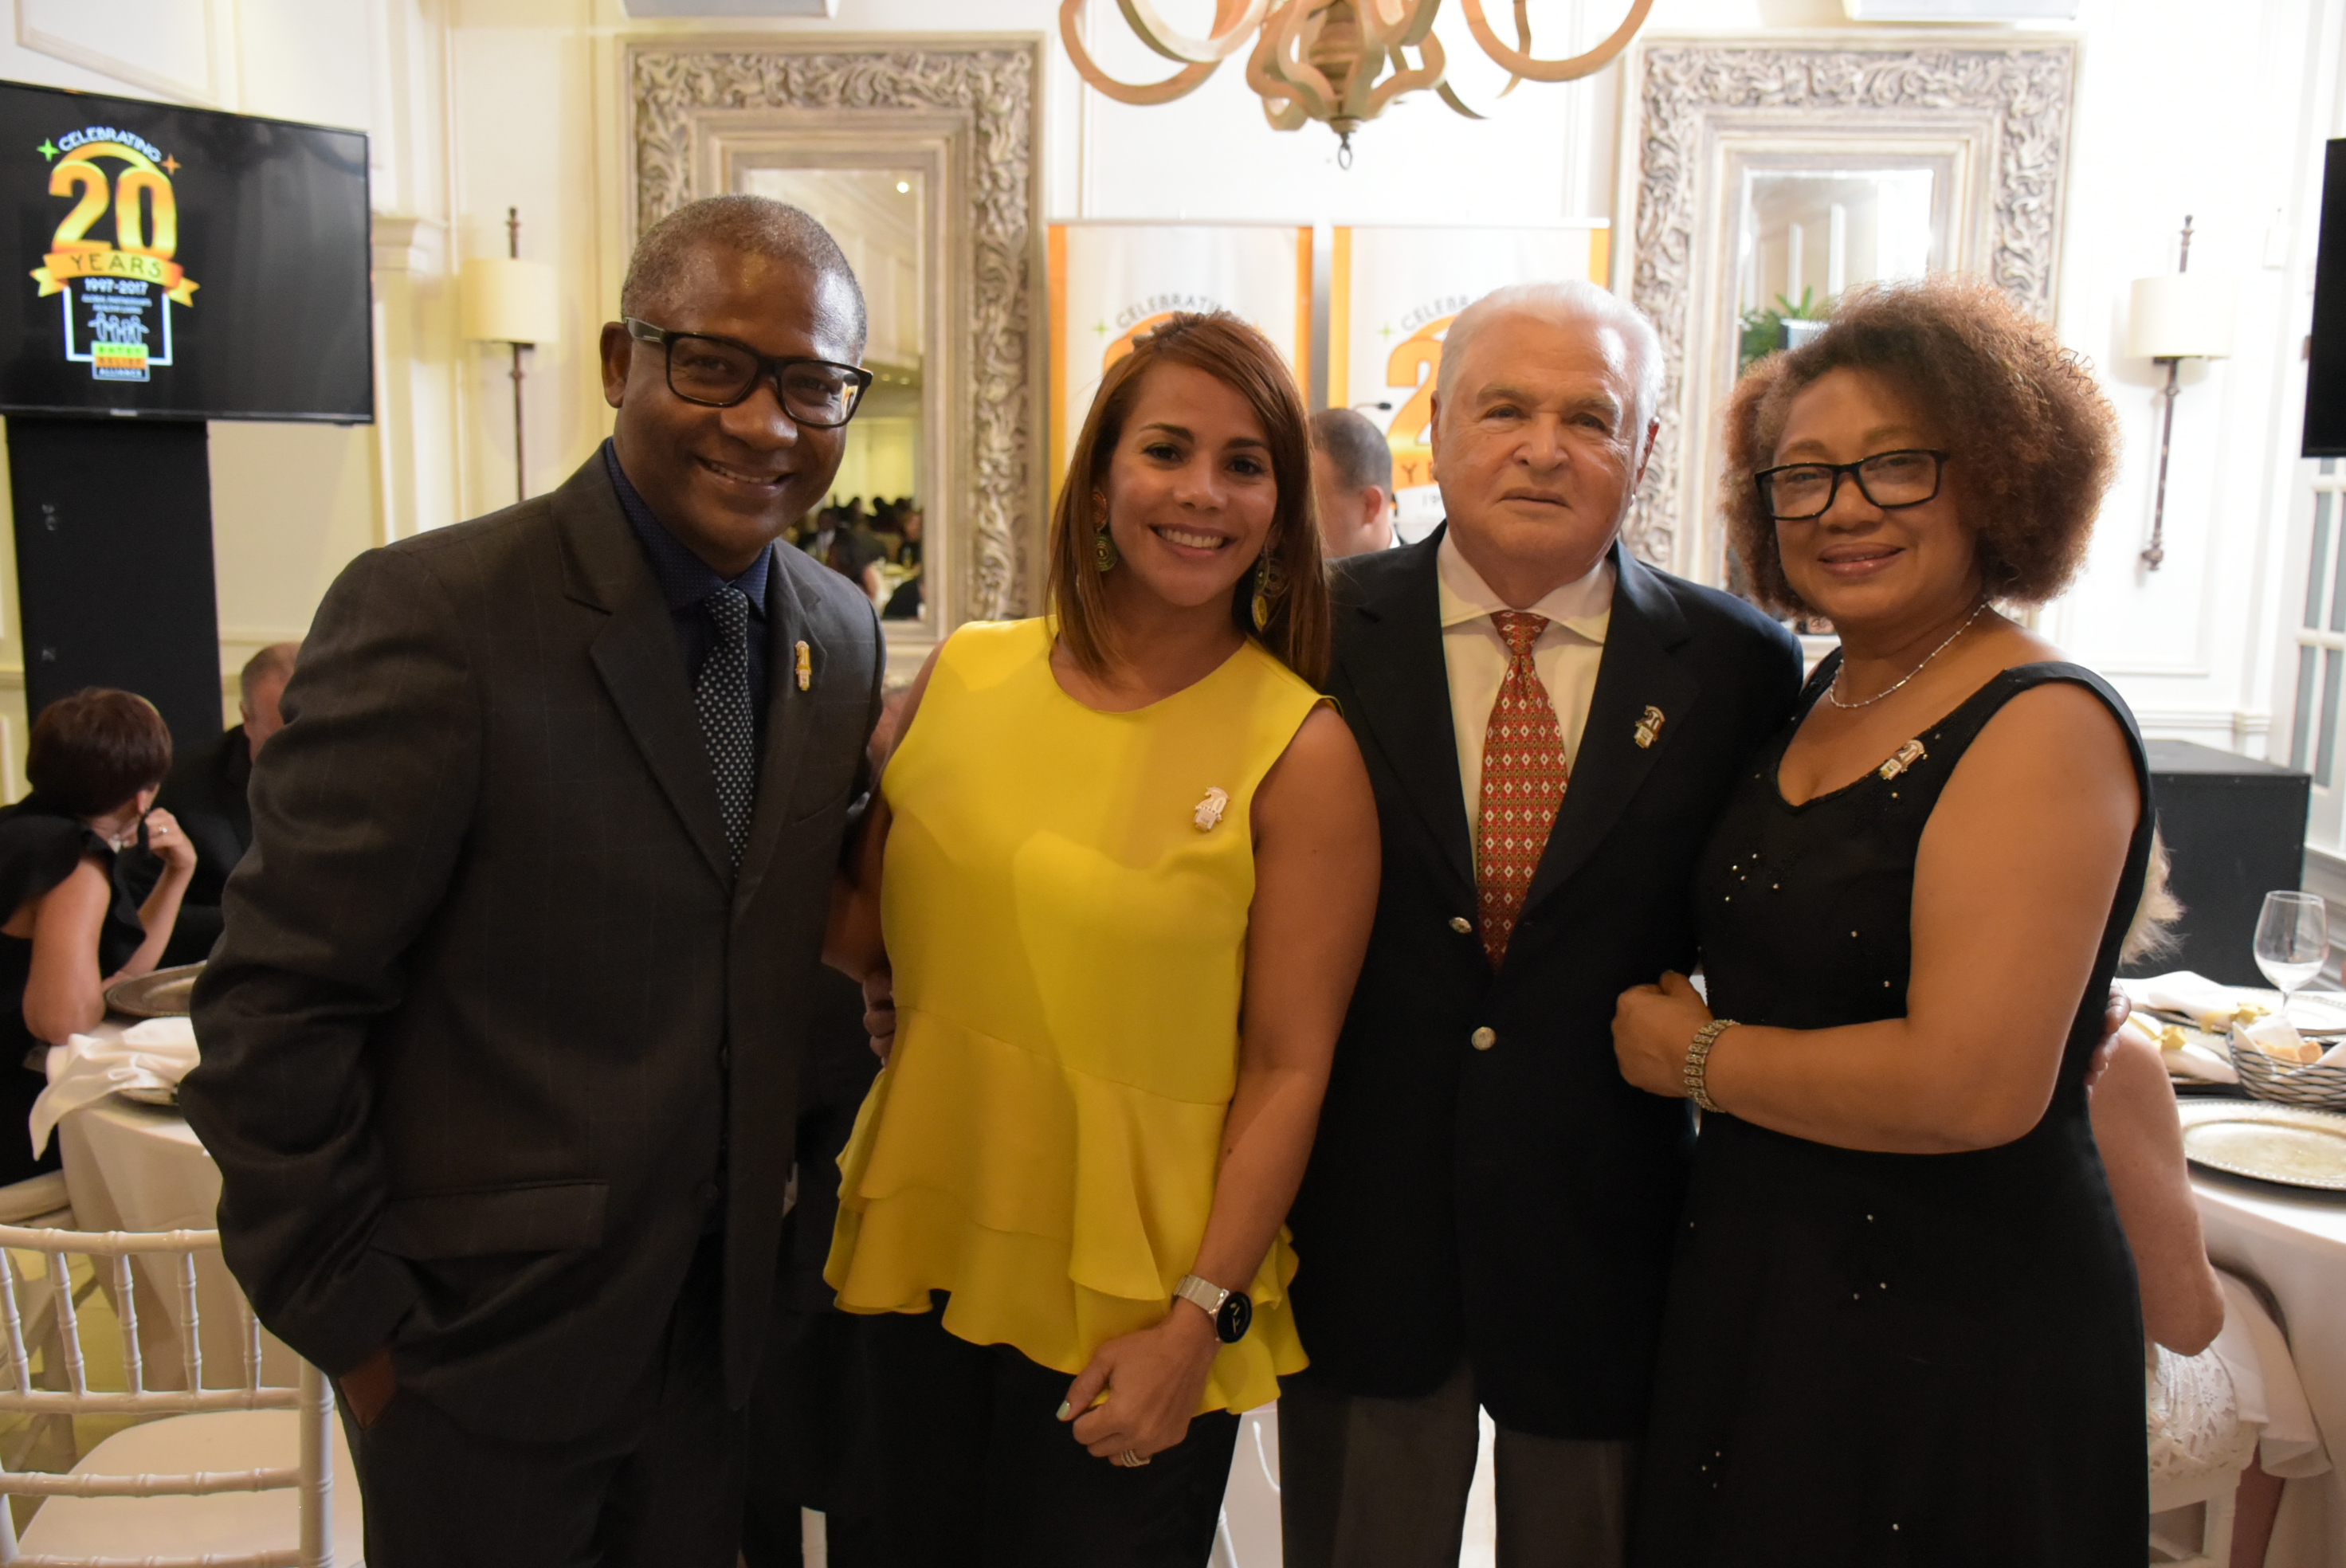  Cena de gala por 20 aniversario de Bra Dominicana